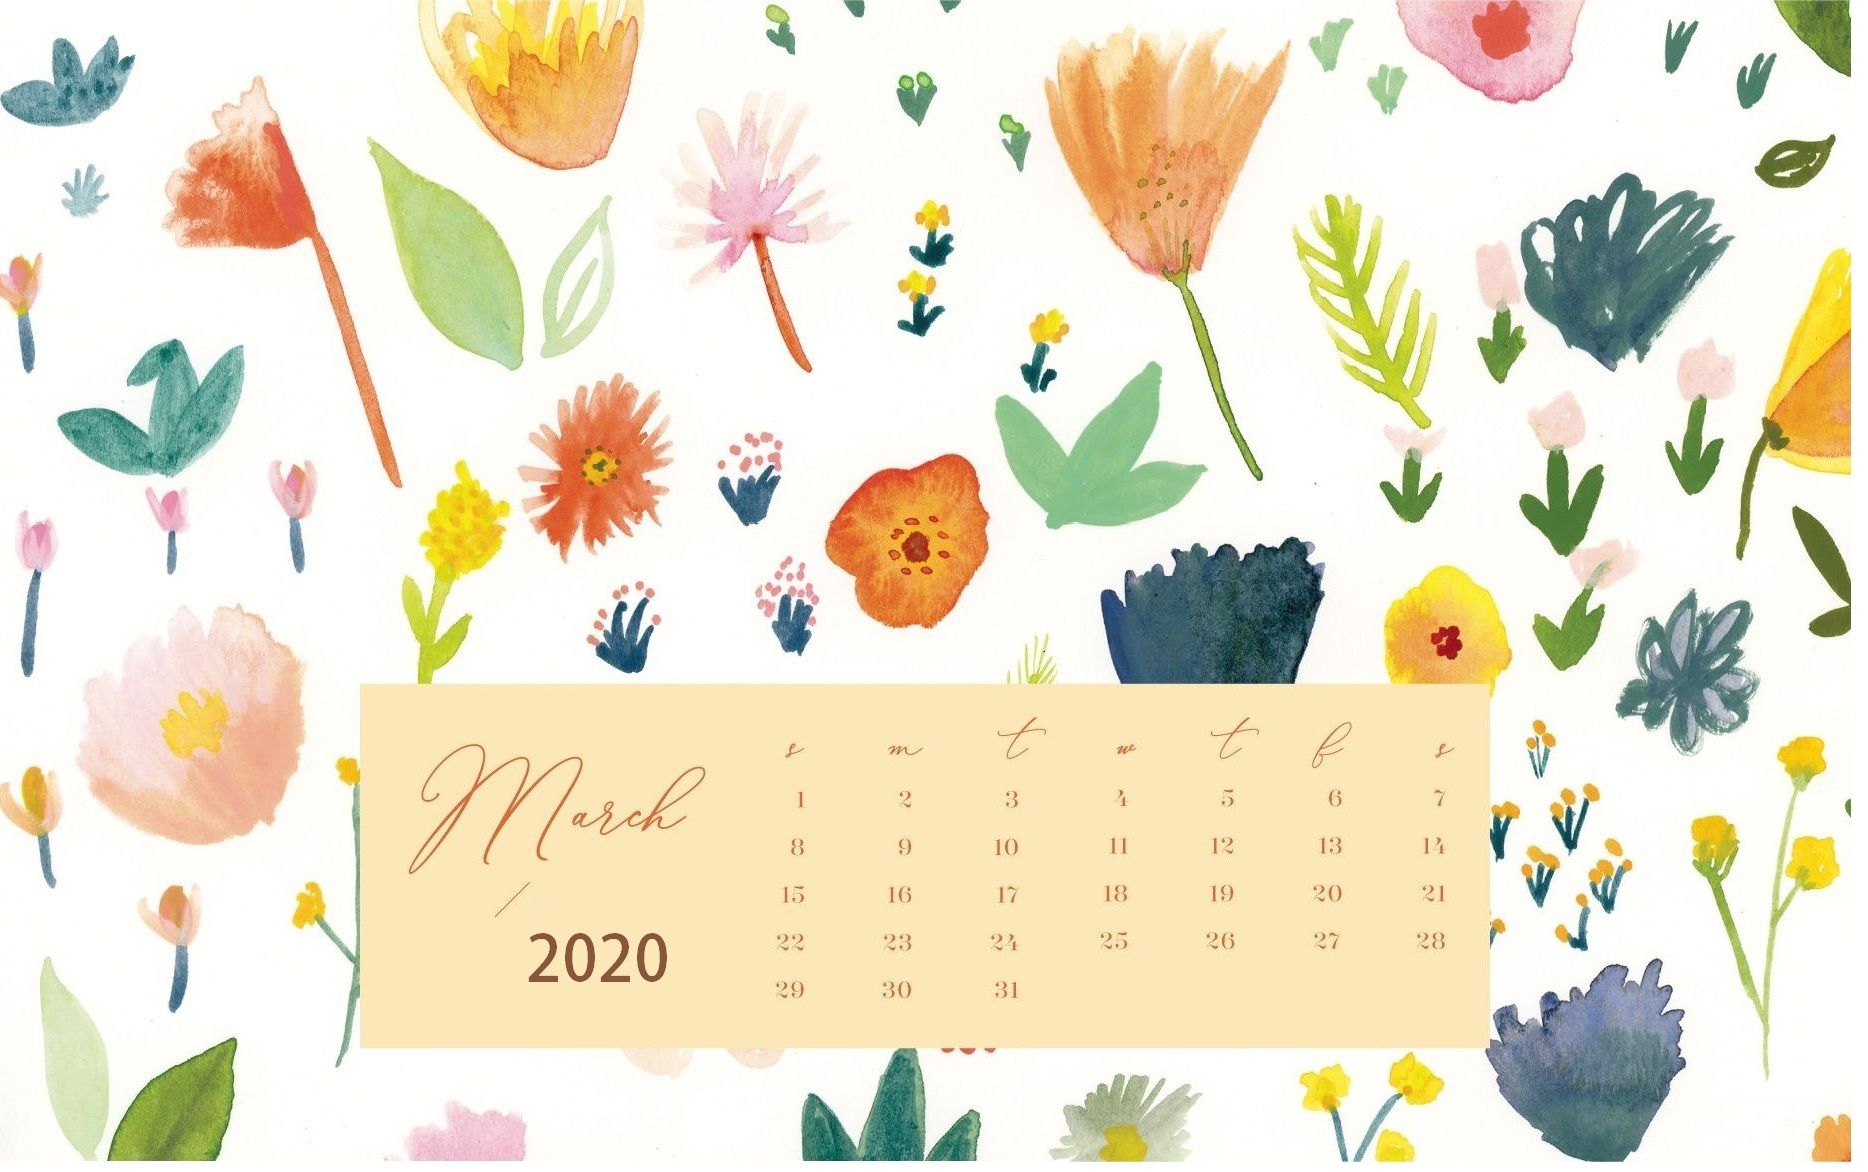 March 2020 Calendar Wallpapers   Top Free March 2020 Calendar